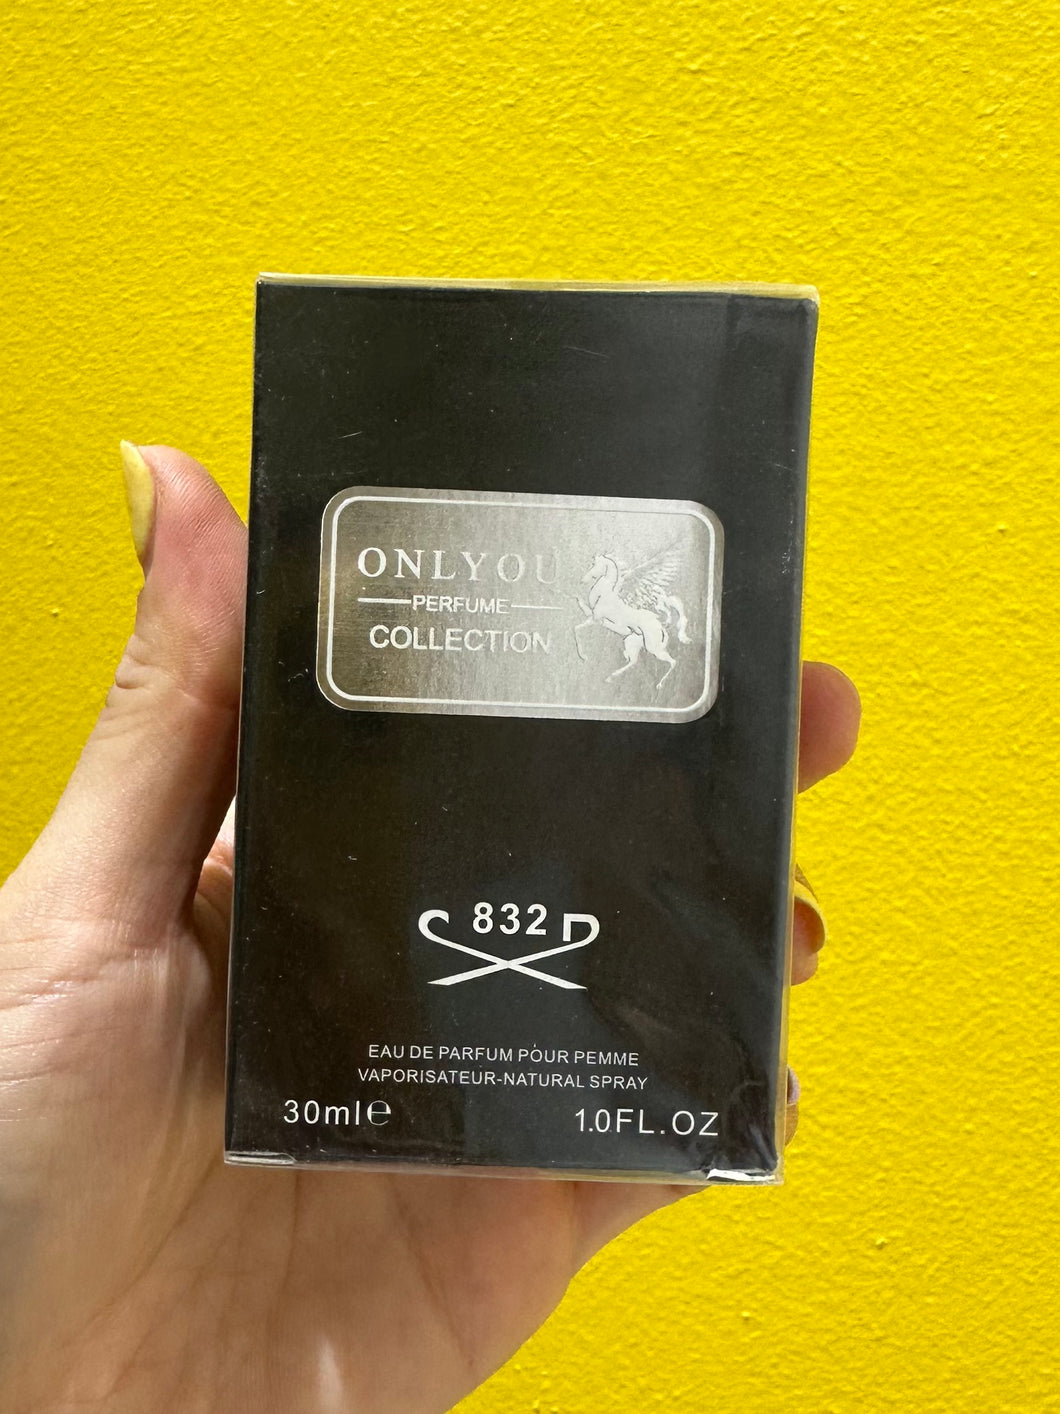 Onlyou 832 perfume